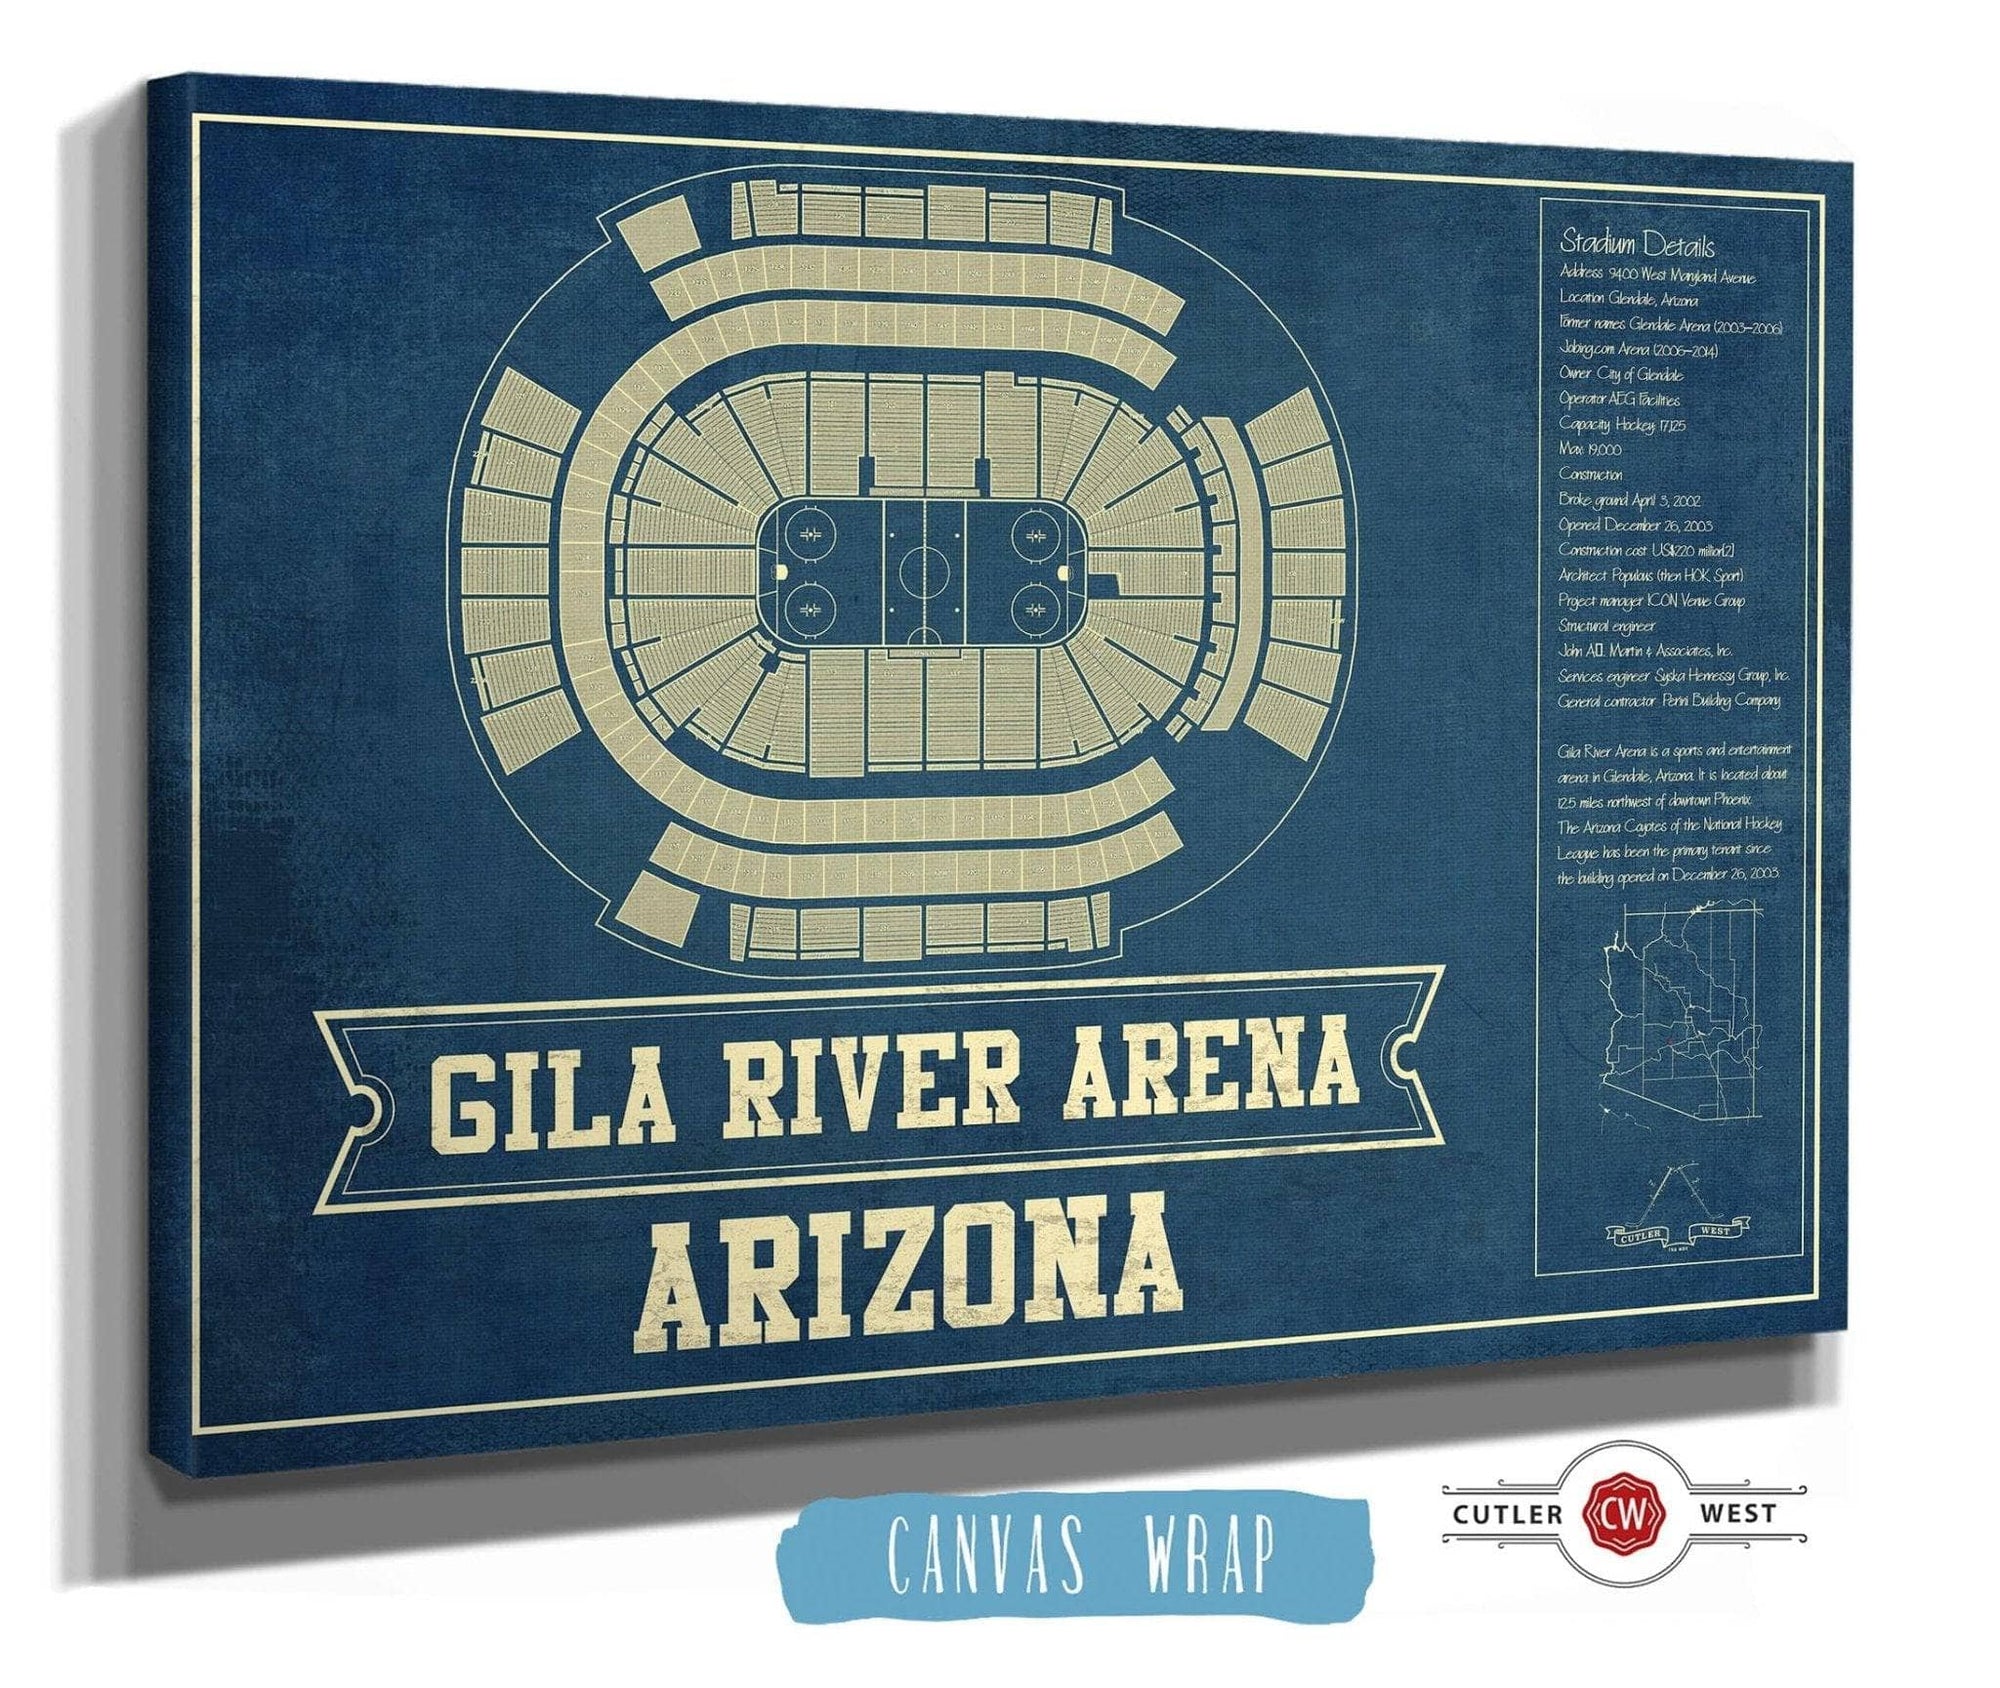 Cutler West 14" x 11" / Stretched Canvas Wrap Arizona Coyotes - Gila River Arena Vintage Hockey Blueprint NHL Print 933350179_78218